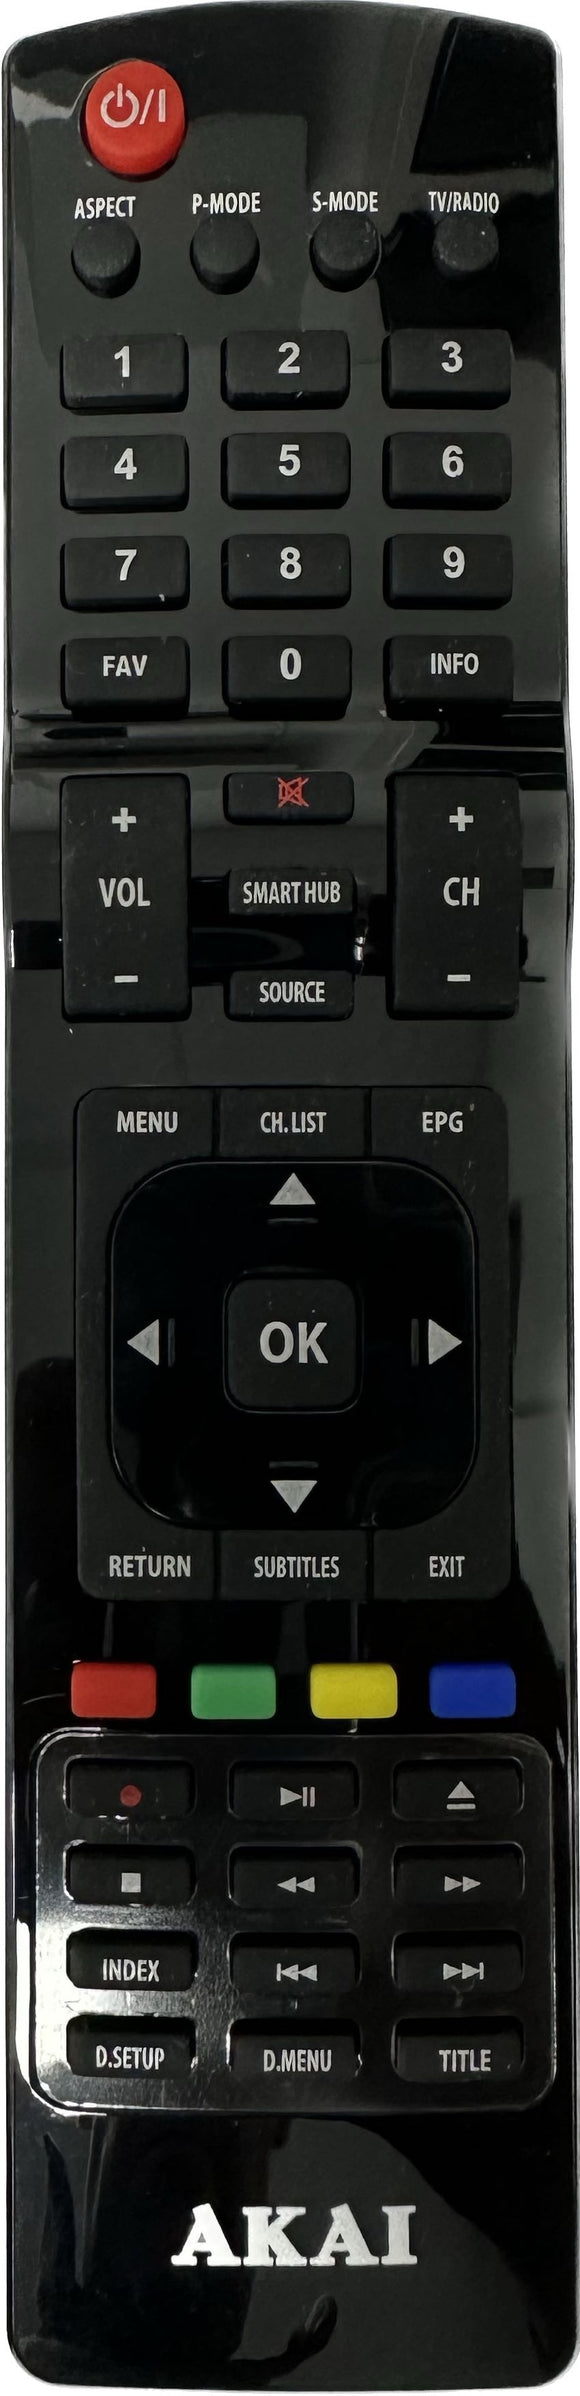 AKAI AK-VJ5515FHD LED TV Original Remote Control Genuine